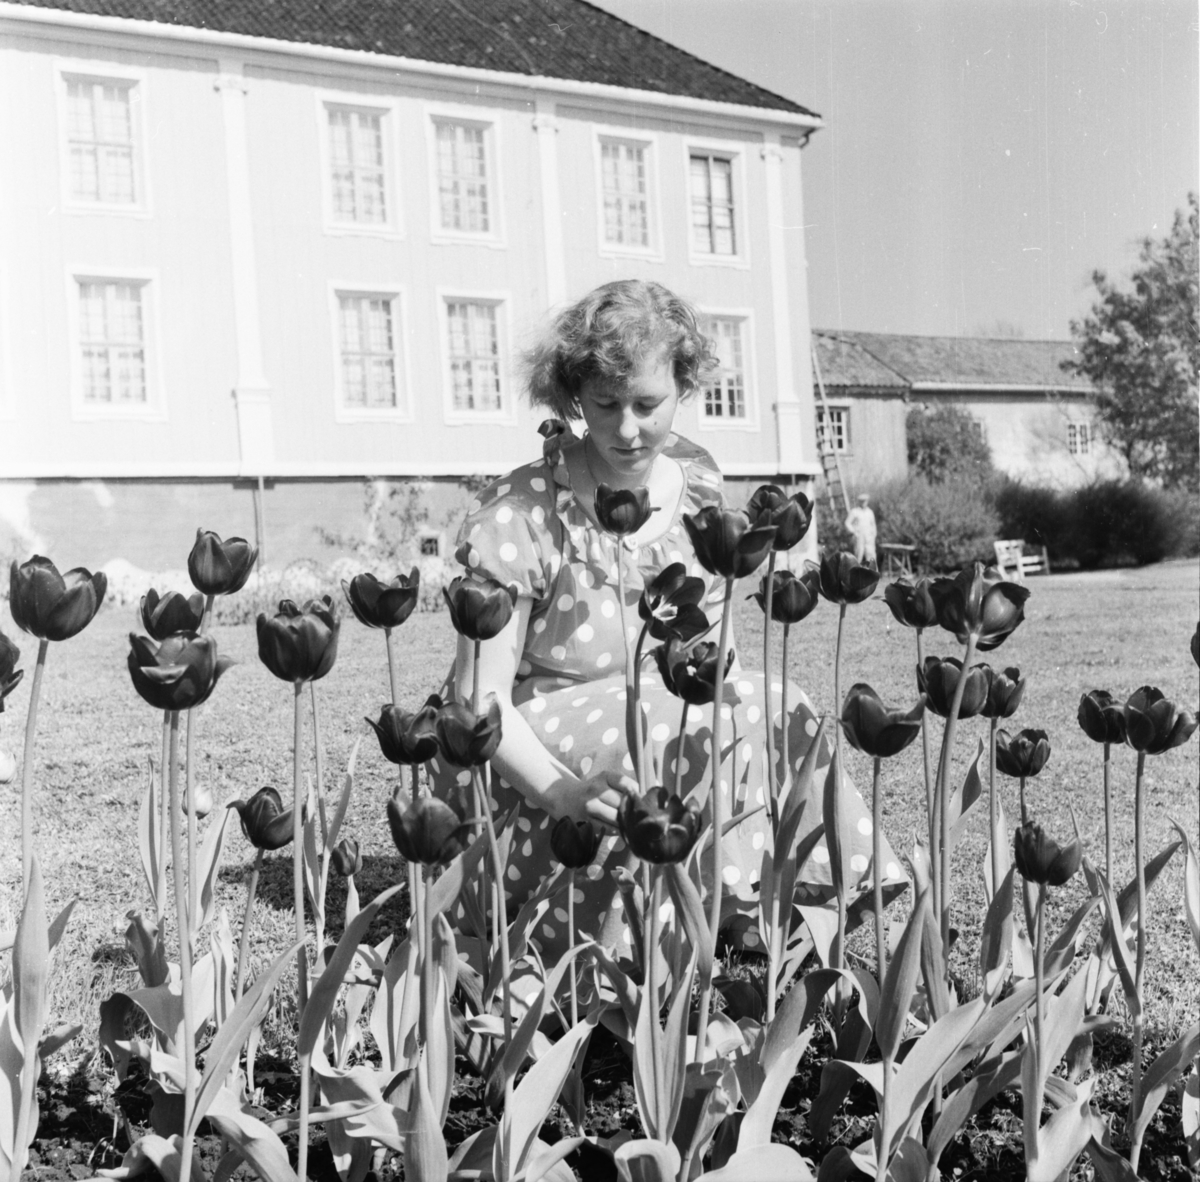 Vardens arkiv. "Anne Matti Hagen i Brekkeparken" 25.05.1954. Fotograf Haakon Mollestad (1919-1996) er fotografen.